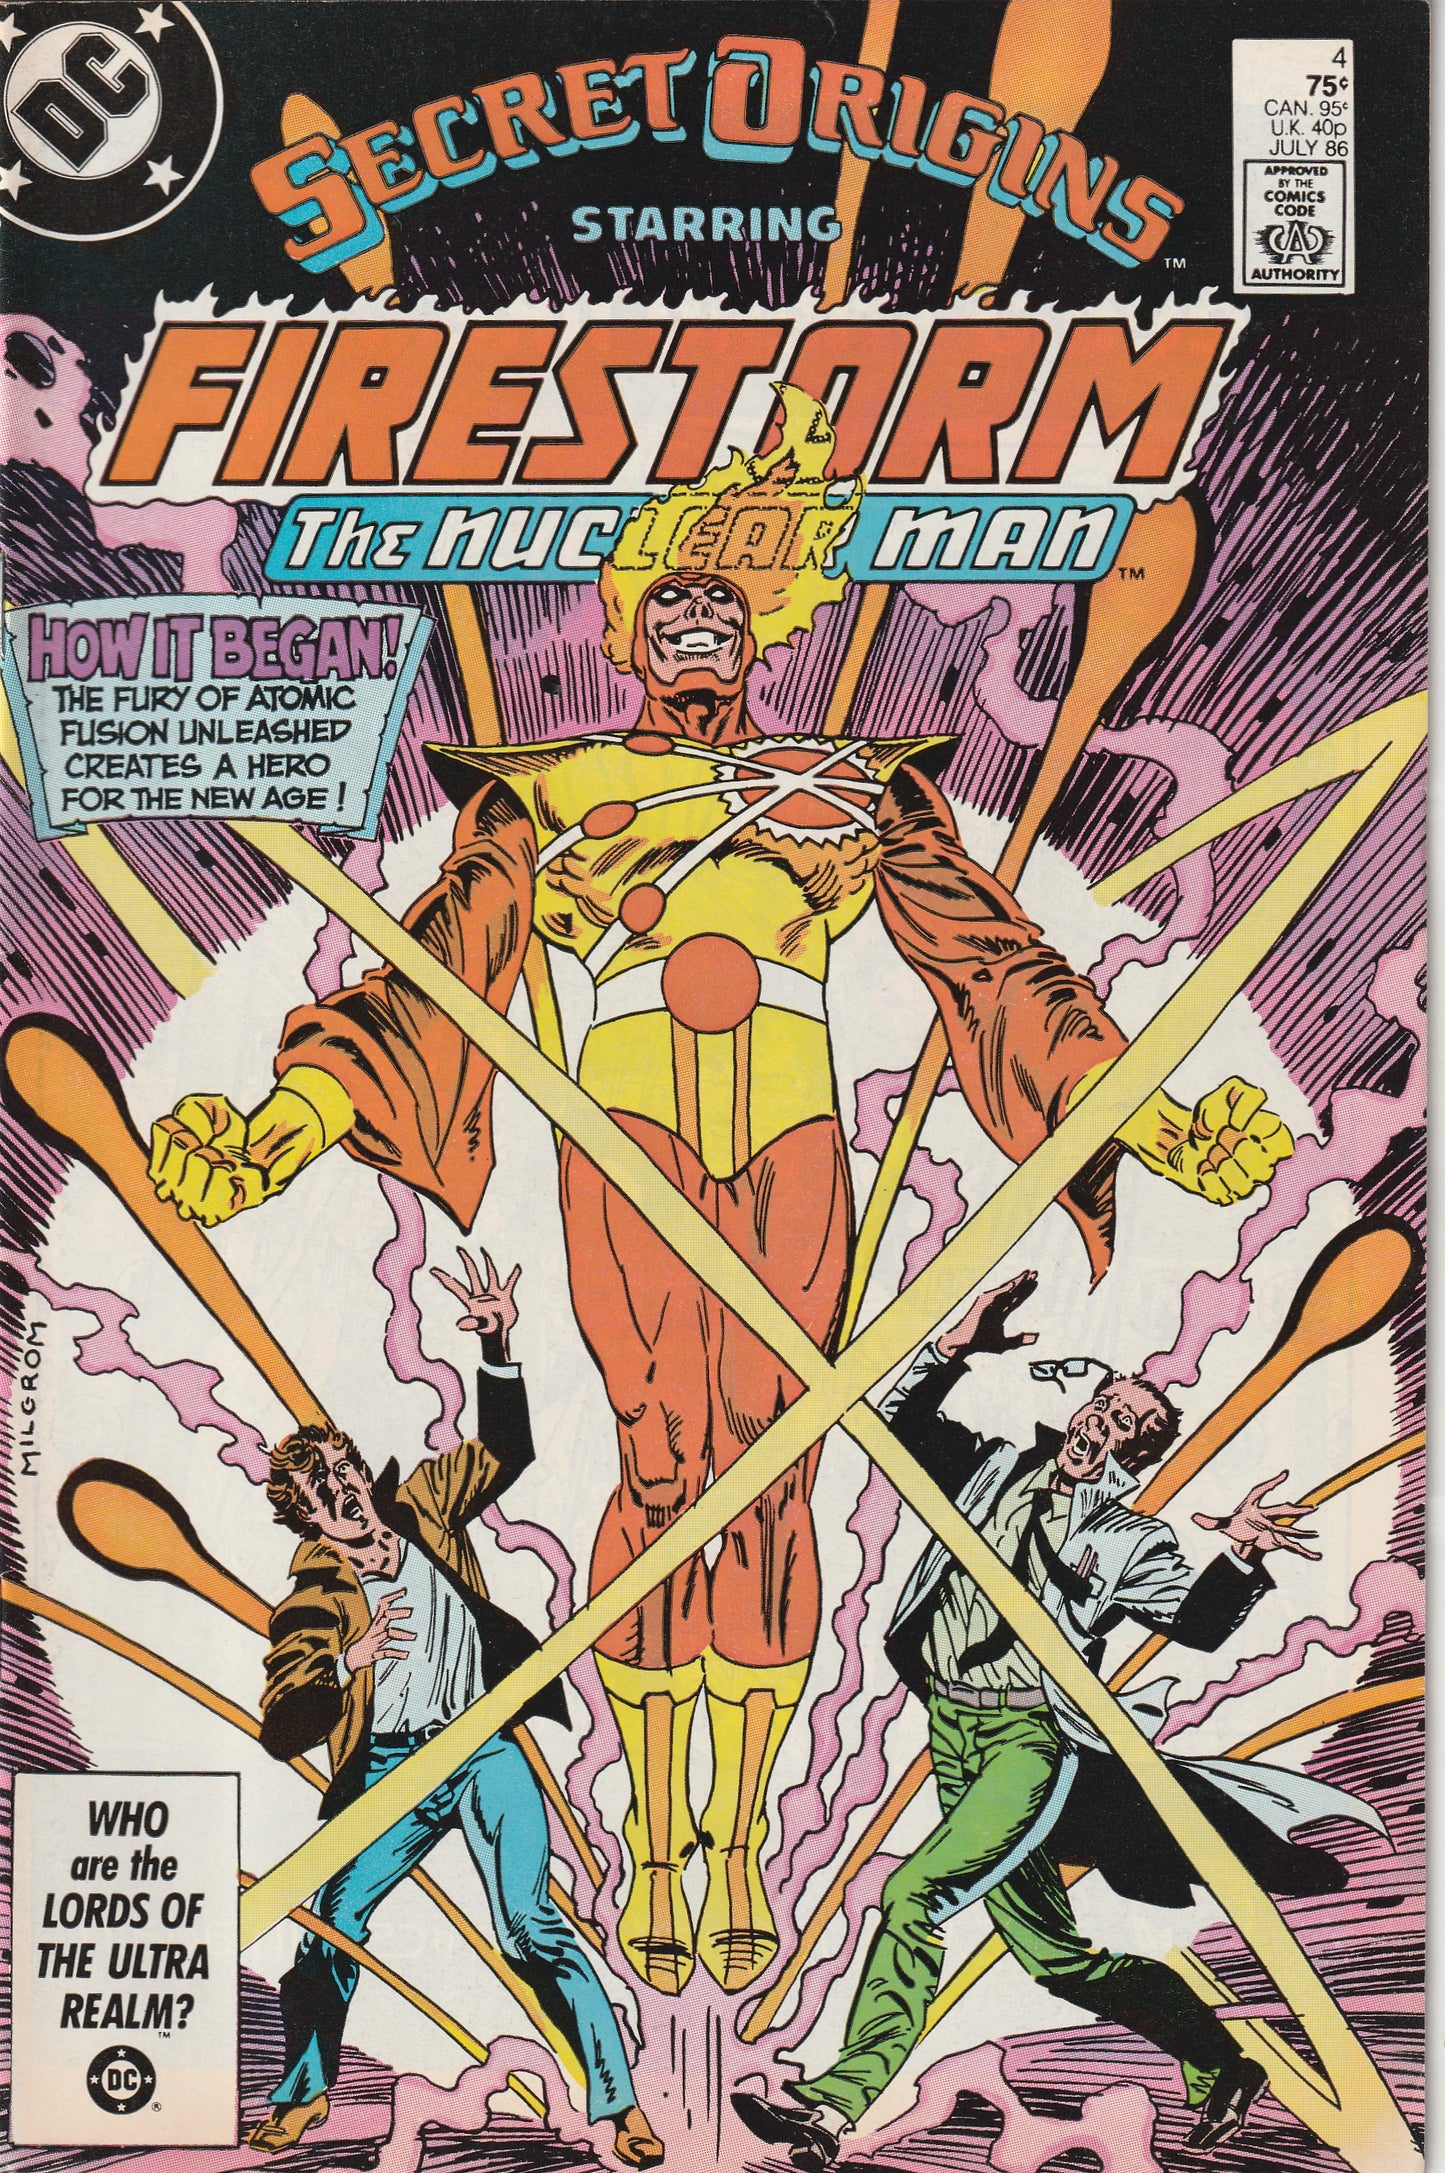 Secret Origins #4 (1986) - Firestorm The Nuclear Man